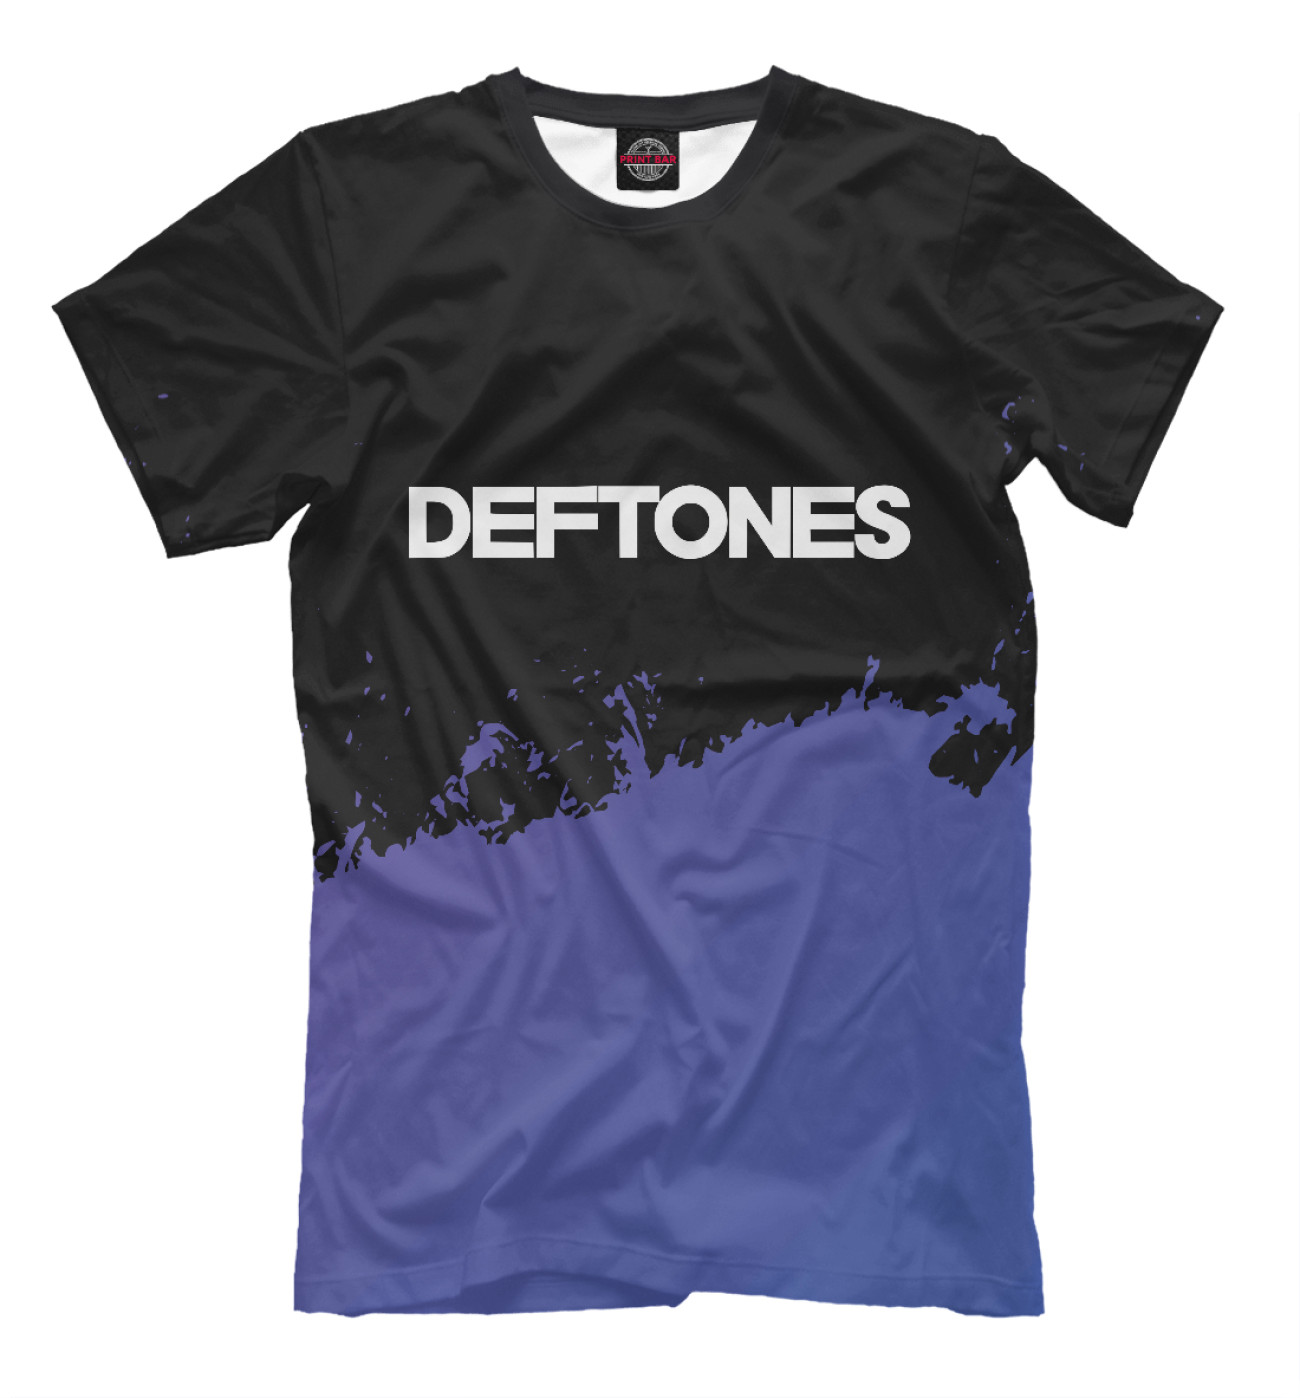 Мужская Футболка Deftones Purple Grunge, артикул: DFT-648573-fut-2